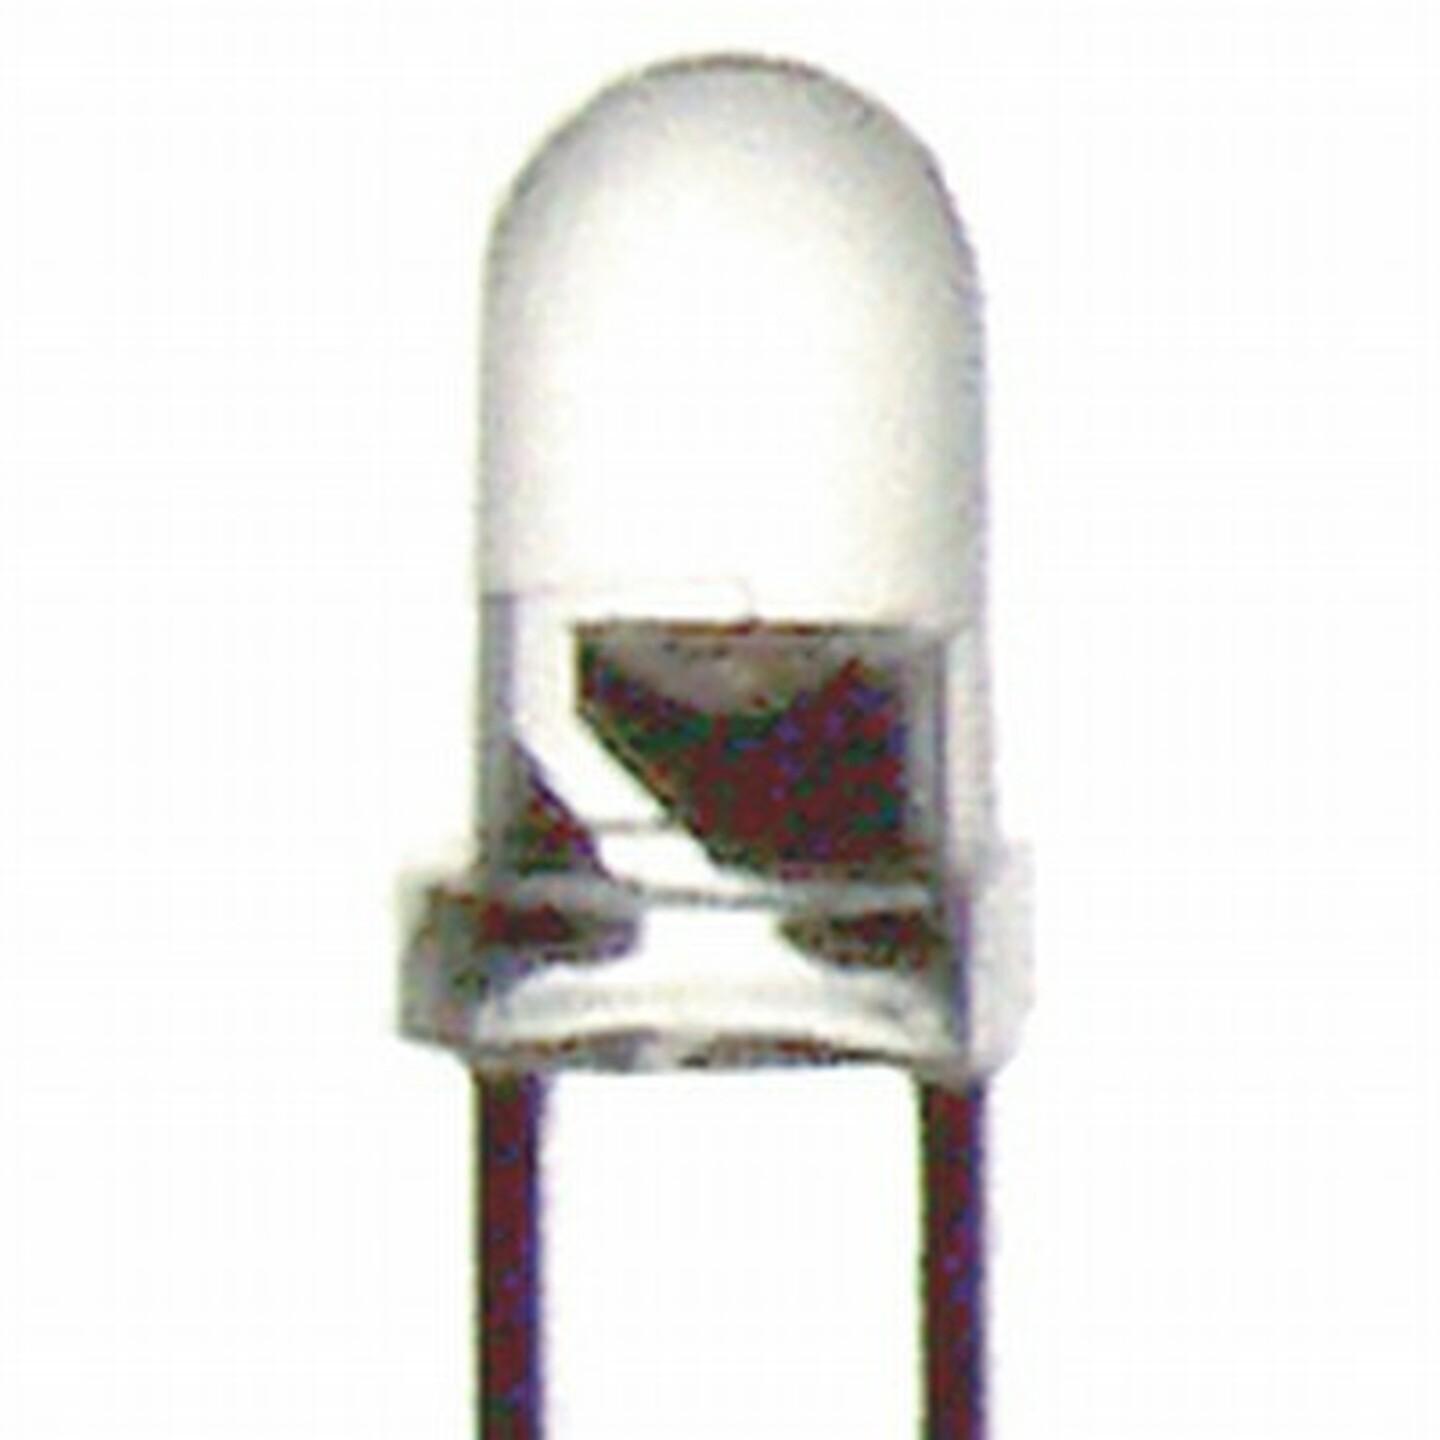 LED 5mm White Waterclear 40000mcd